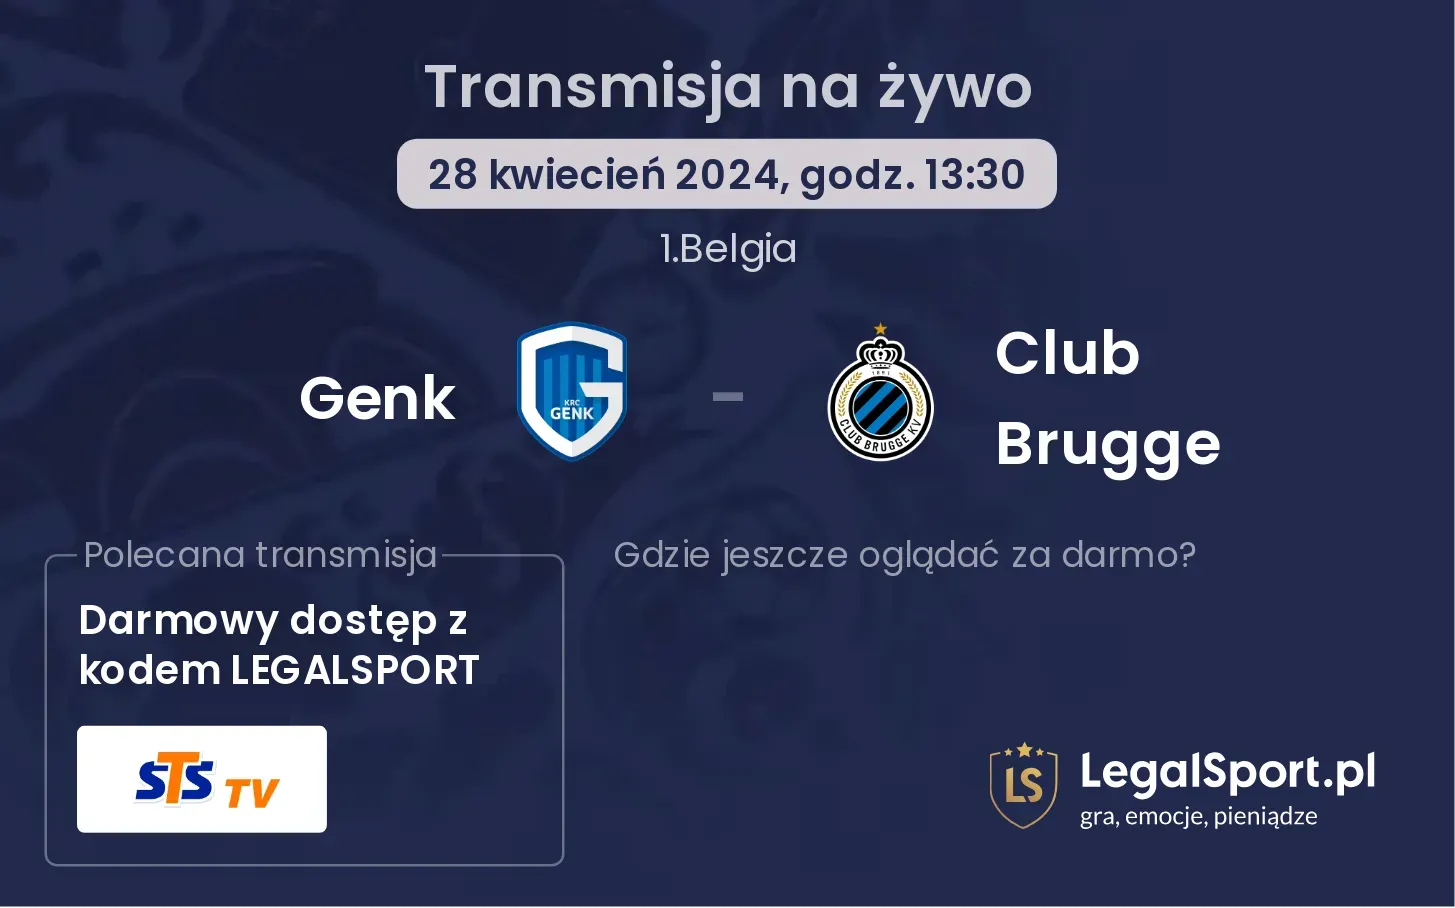 Genk - Club Brugge transmisja na żywo